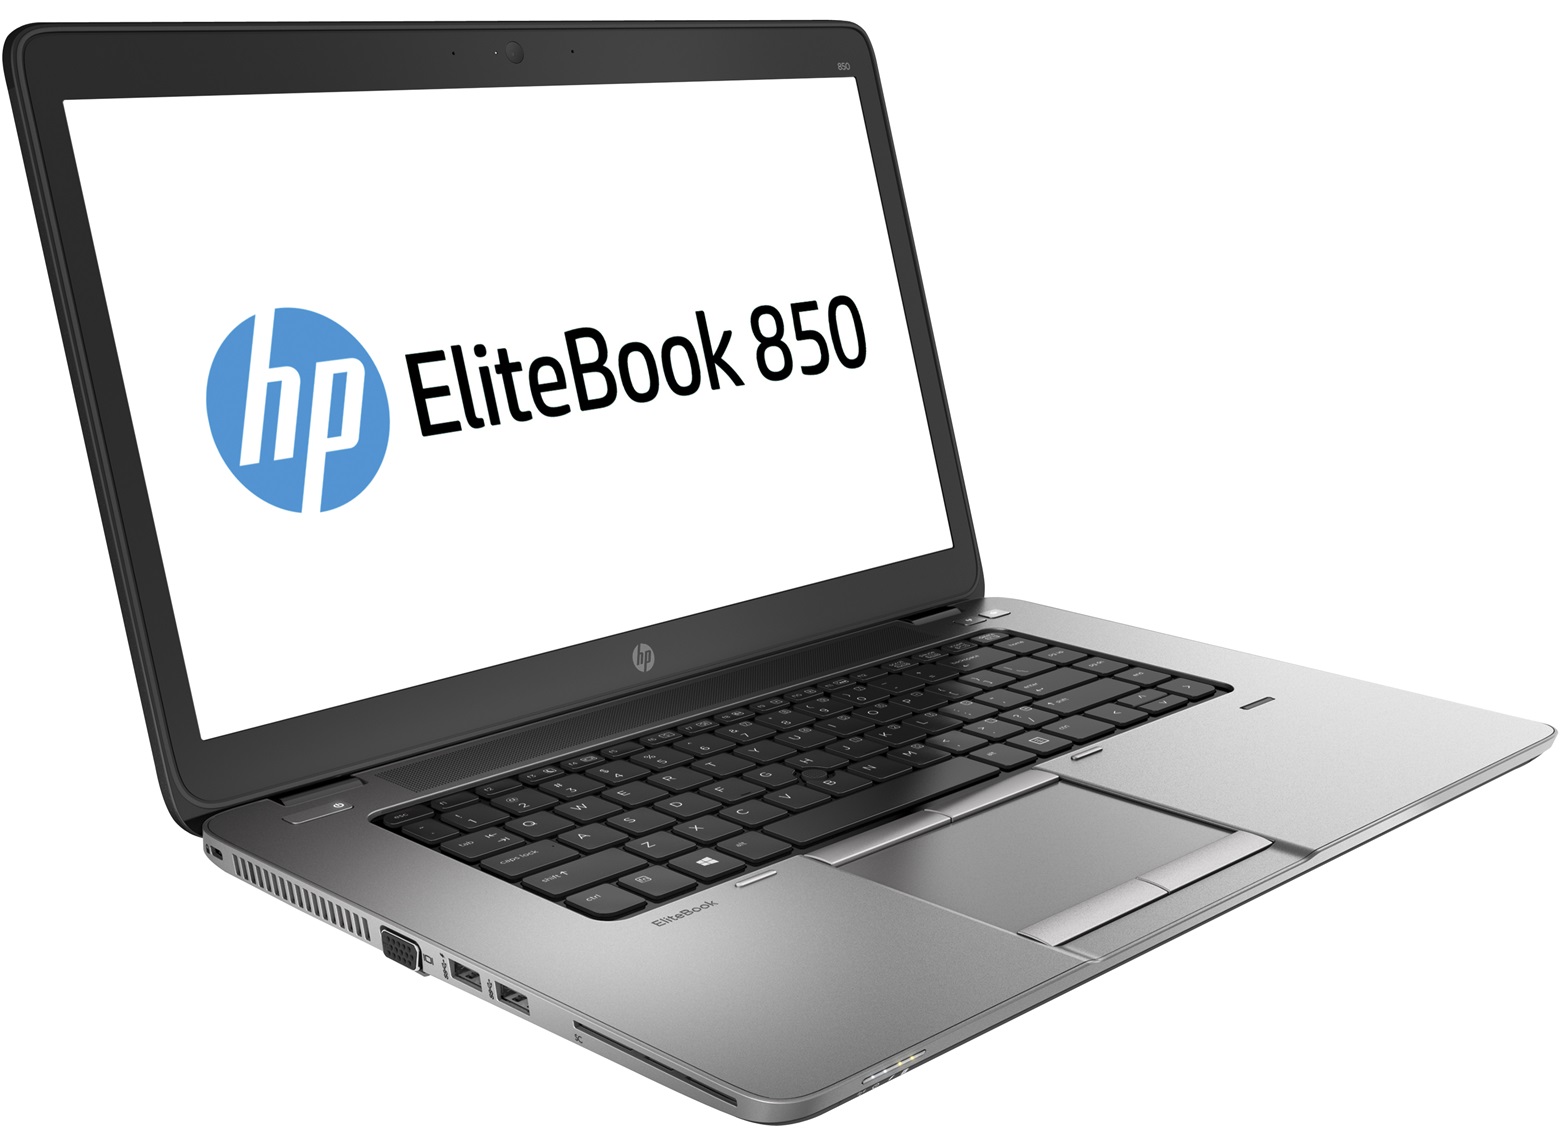 HP Elitebook 850 G4 CAD1 15,6'' FHD i7-7500U 16GB 512GB-SSD-m.2 ATI-465M-2GB Win10P/W7P 3J.Gar., CTO